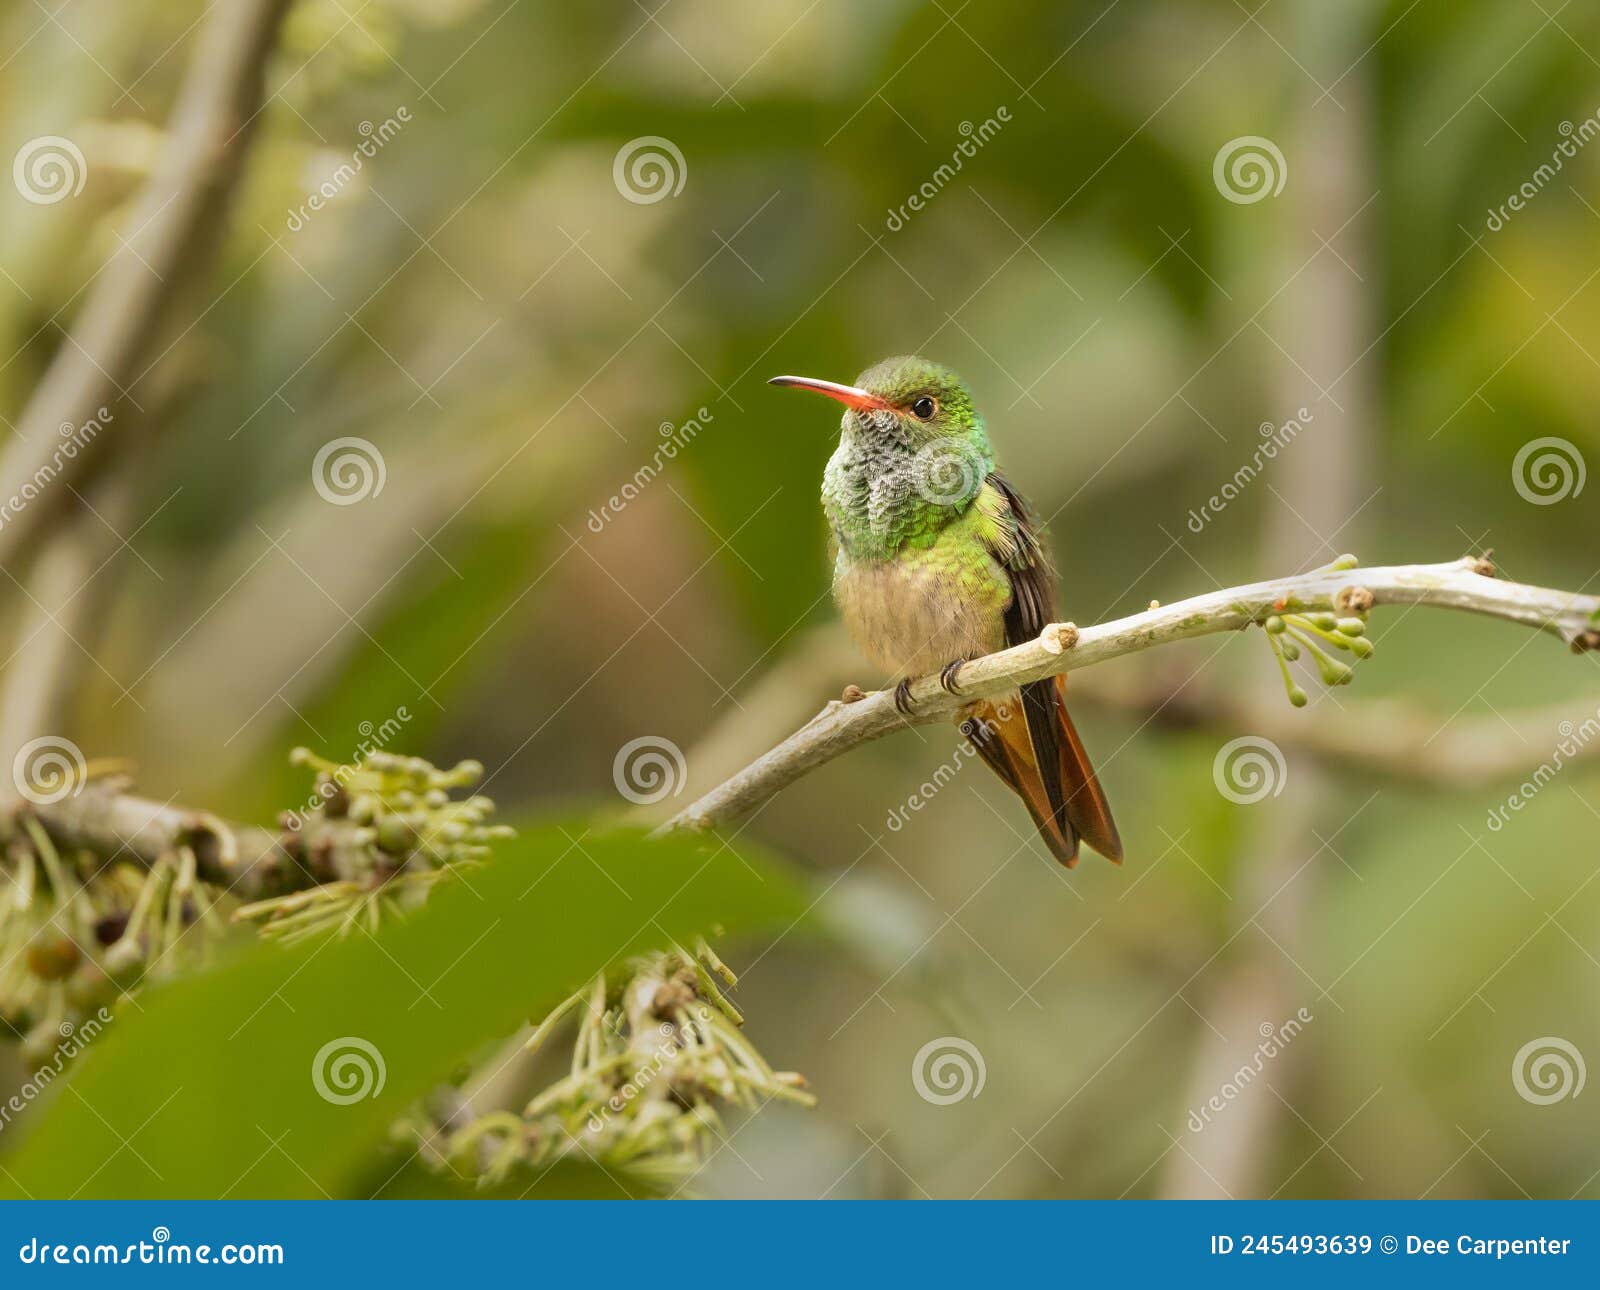 a rufous-tailed hummingbird in ecuador